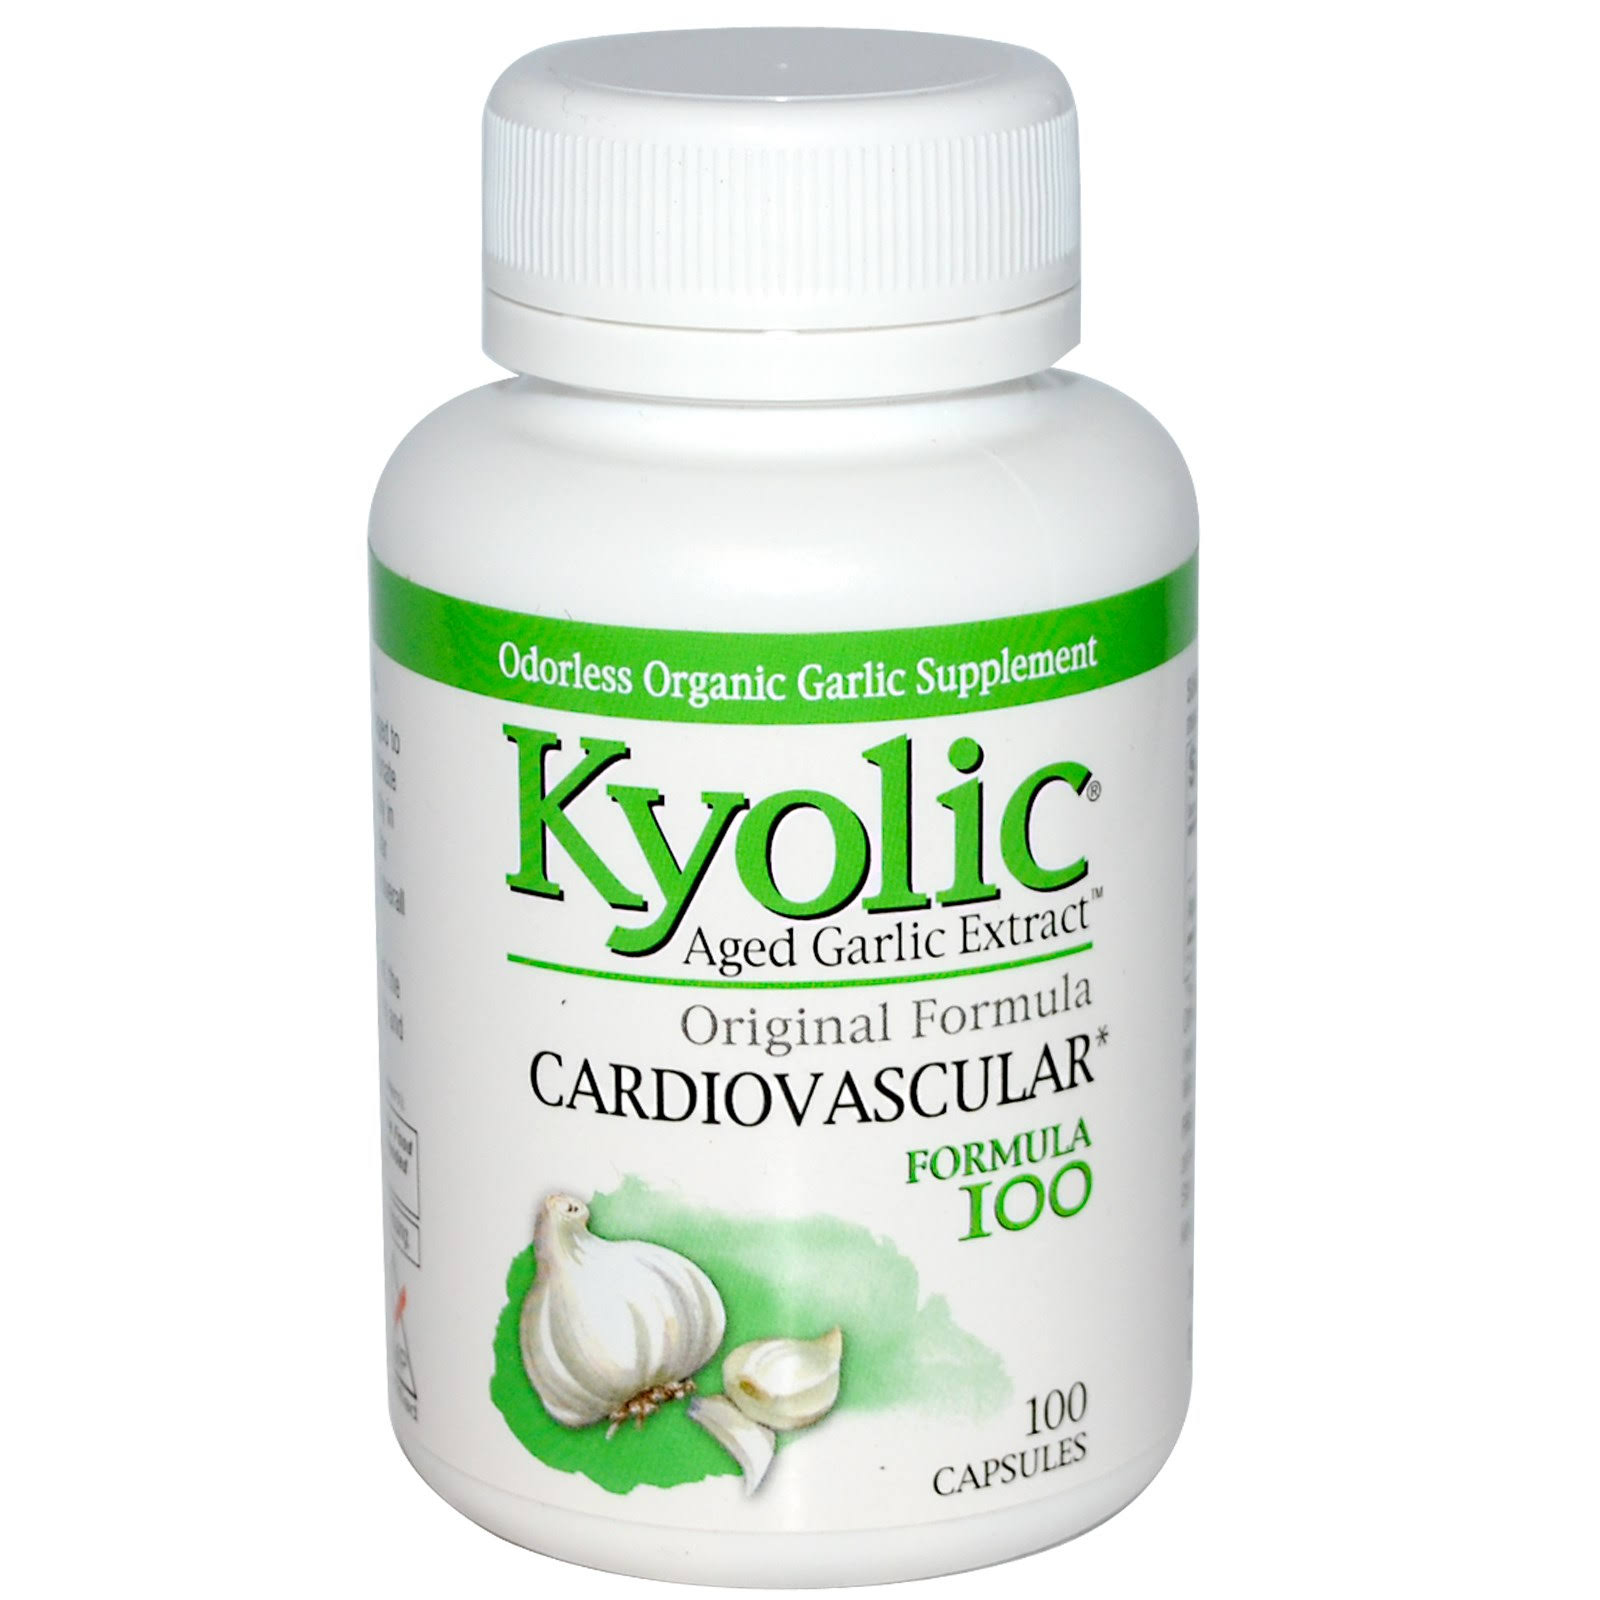 Kyolic Aged Garlic Extract - Original Formula, 100 capsules